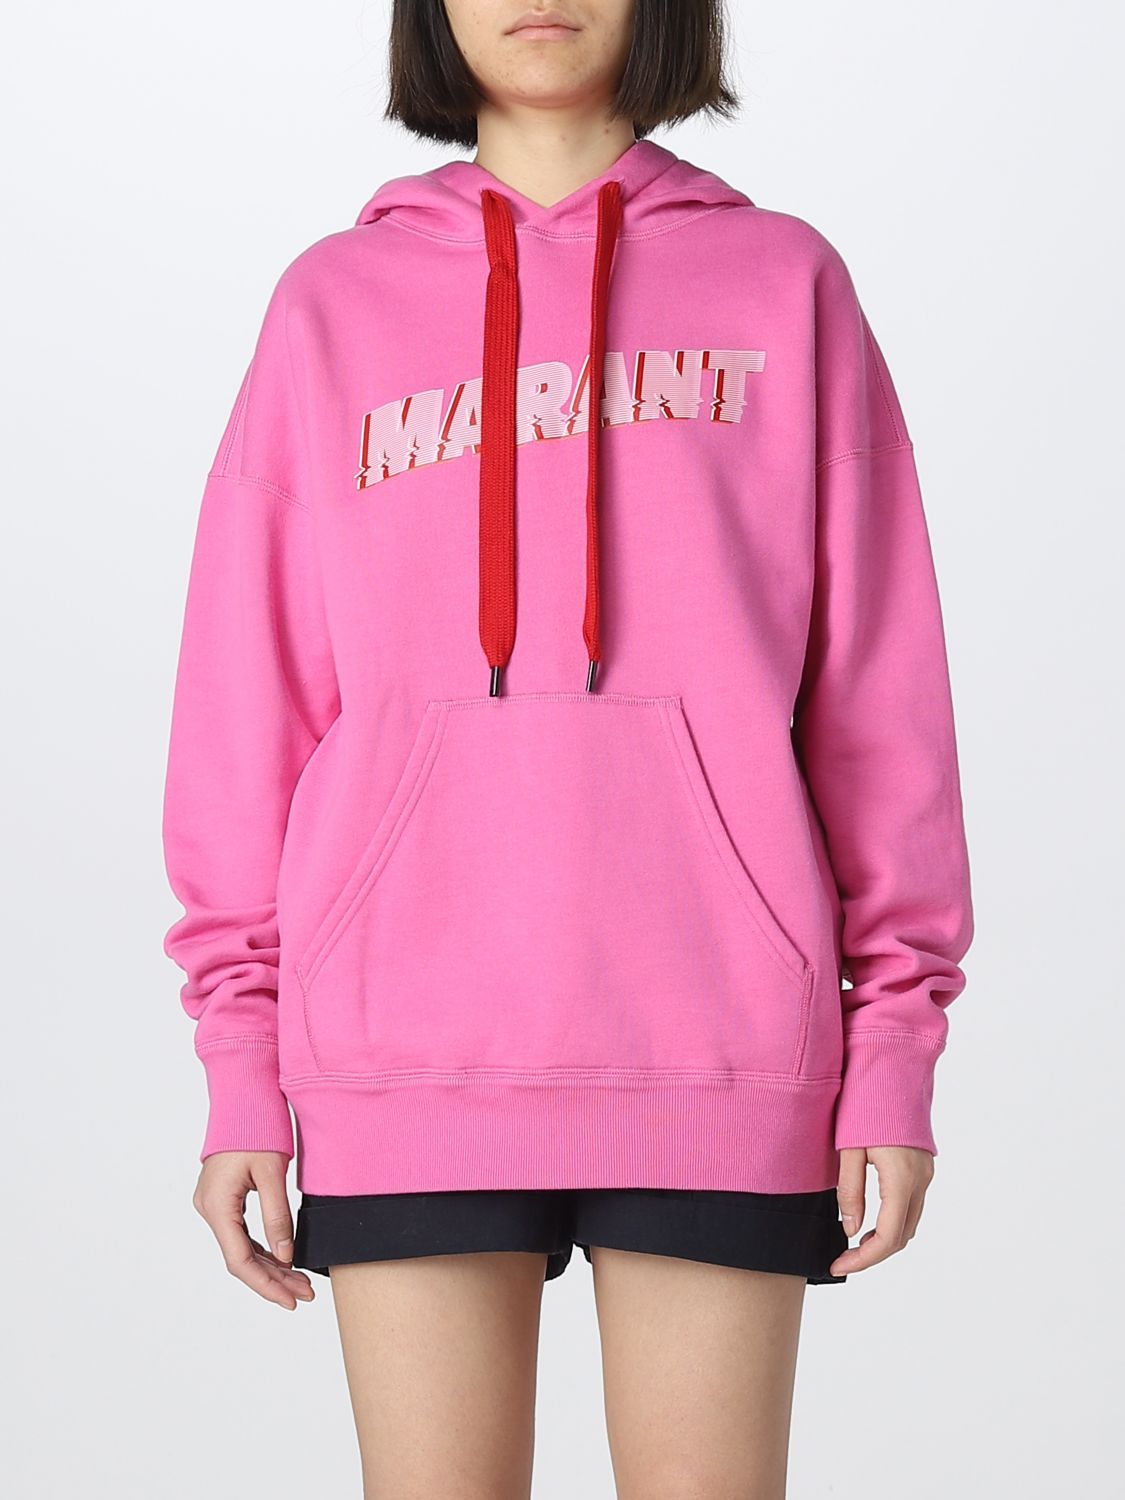 ISABEL MARANT ETOILE: sweatshirt for woman - Pink | Isabel Etoile sweatshirt SW0001FAA1M82E online on GIGLIO.COM